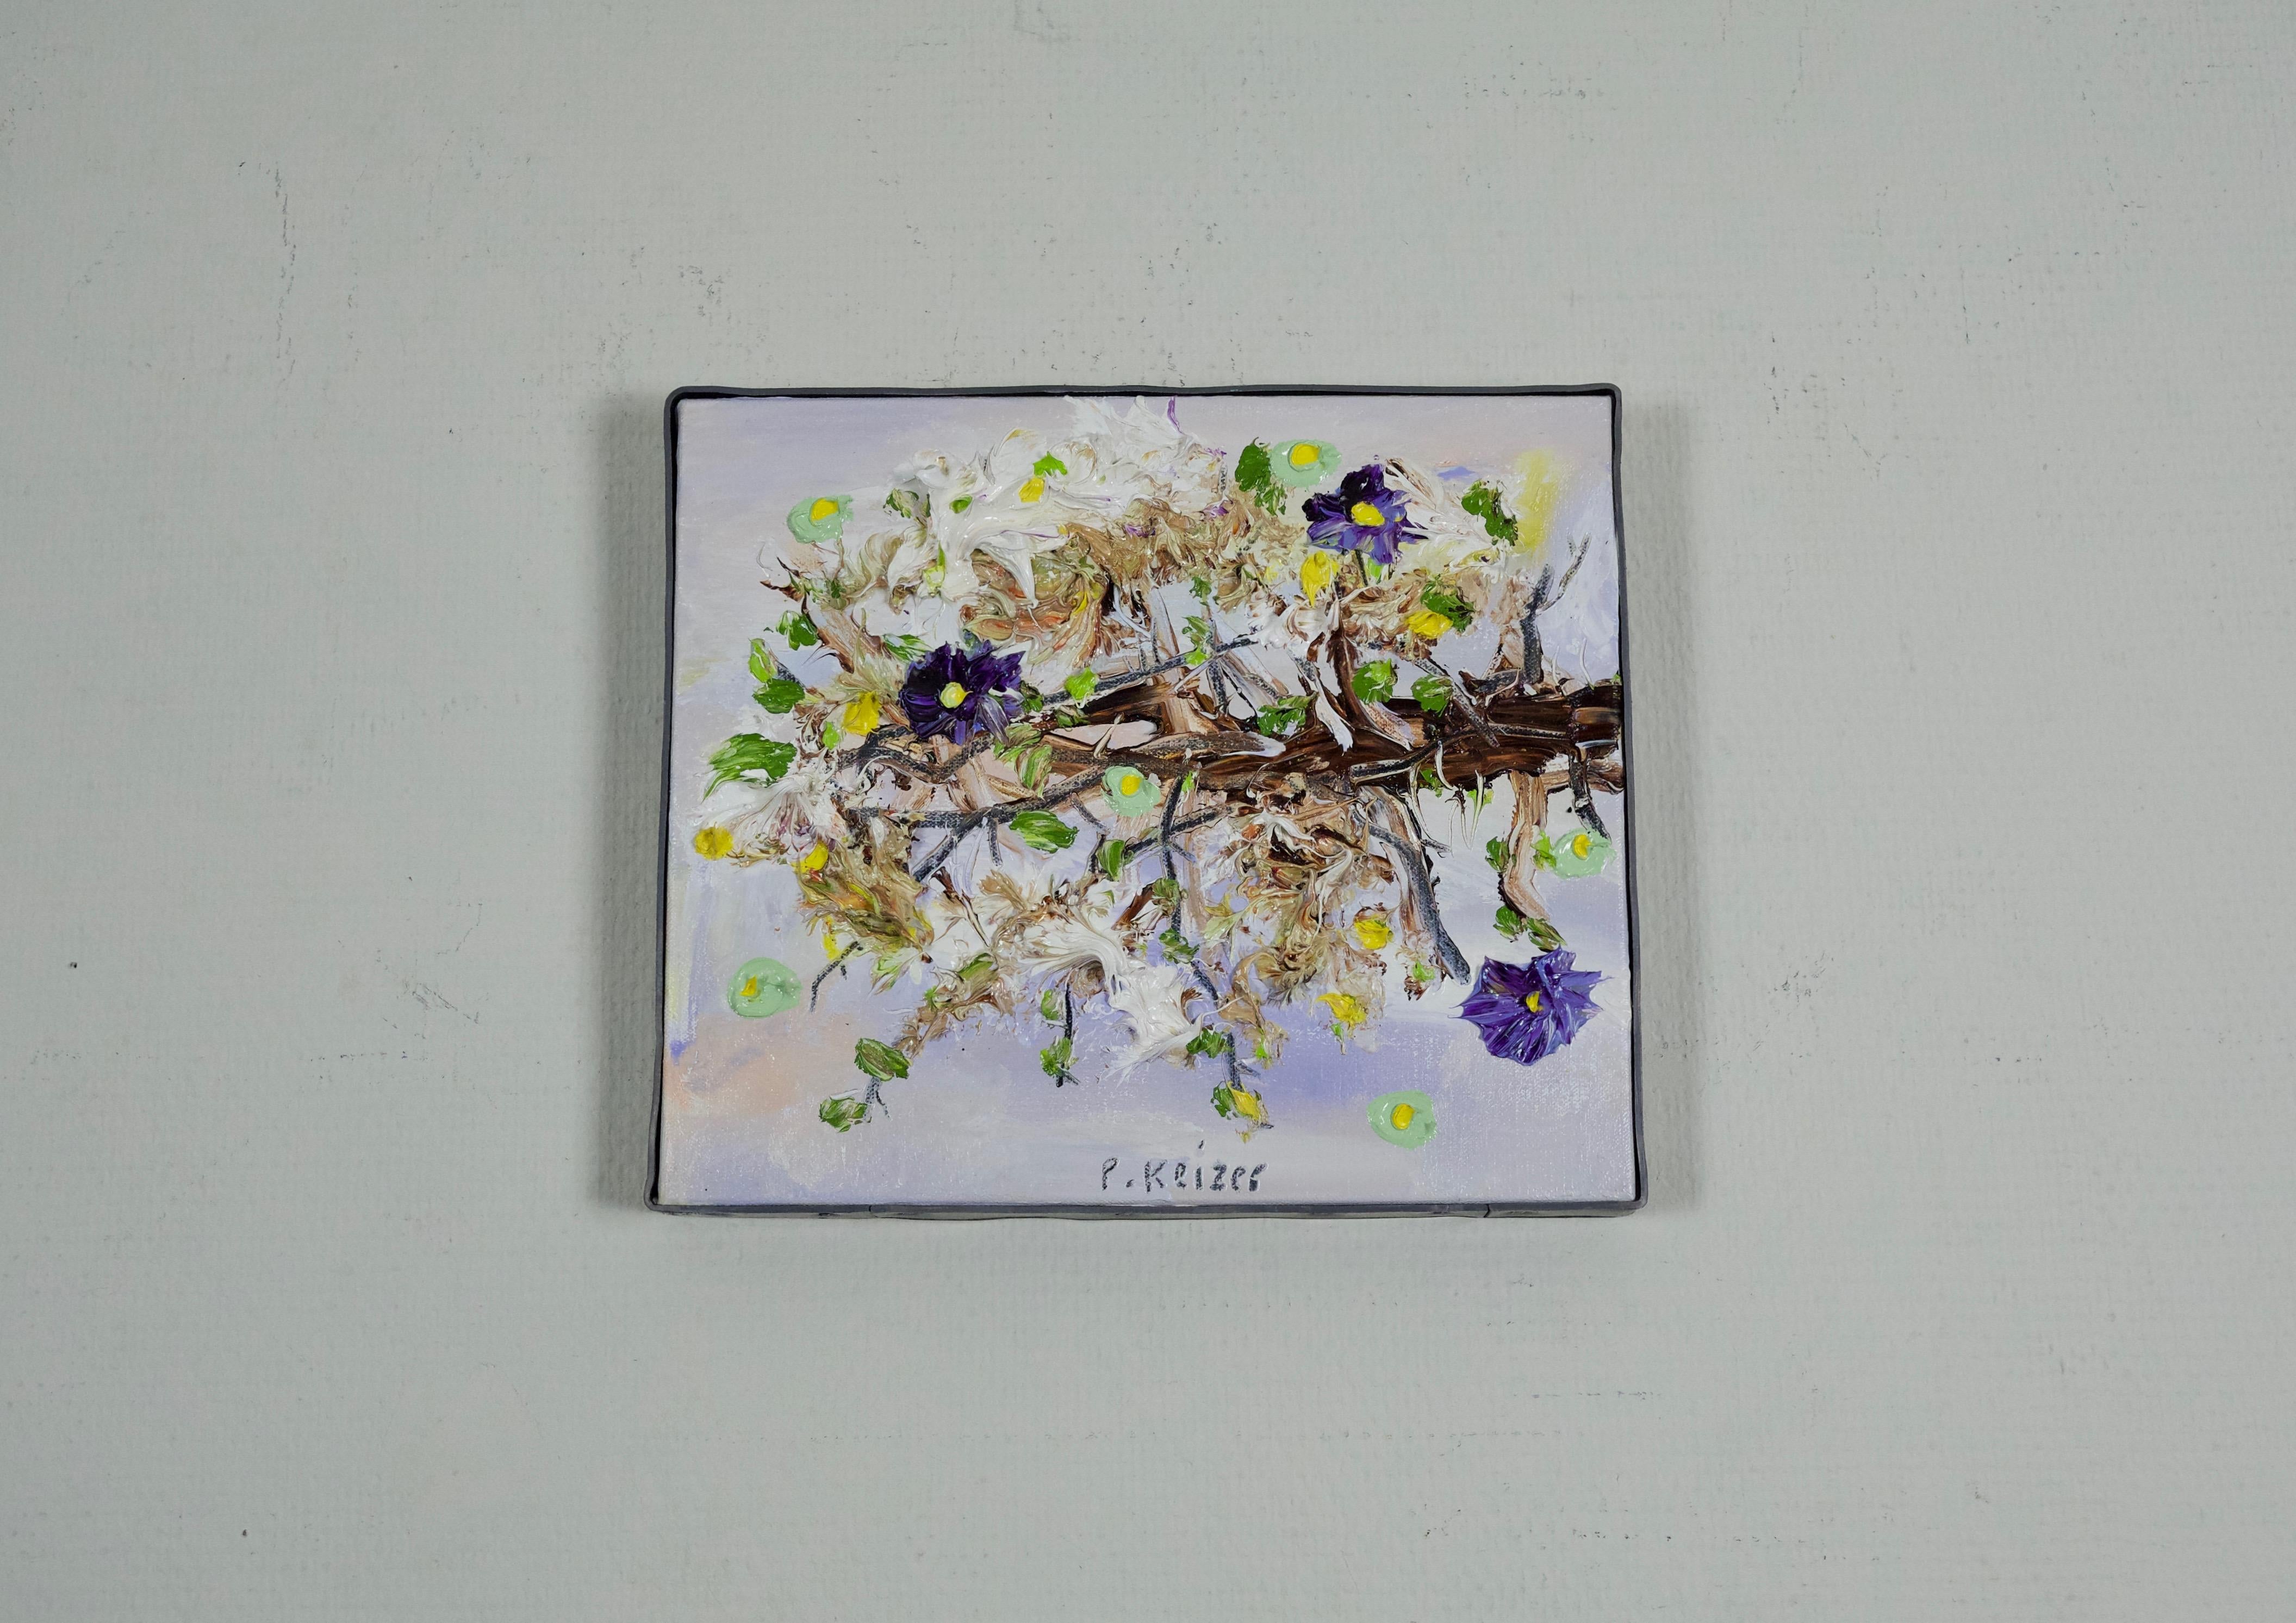 « Blanche-Neige en avril », peinture de Peter Keizer (11x12'), 2020 en vente 1